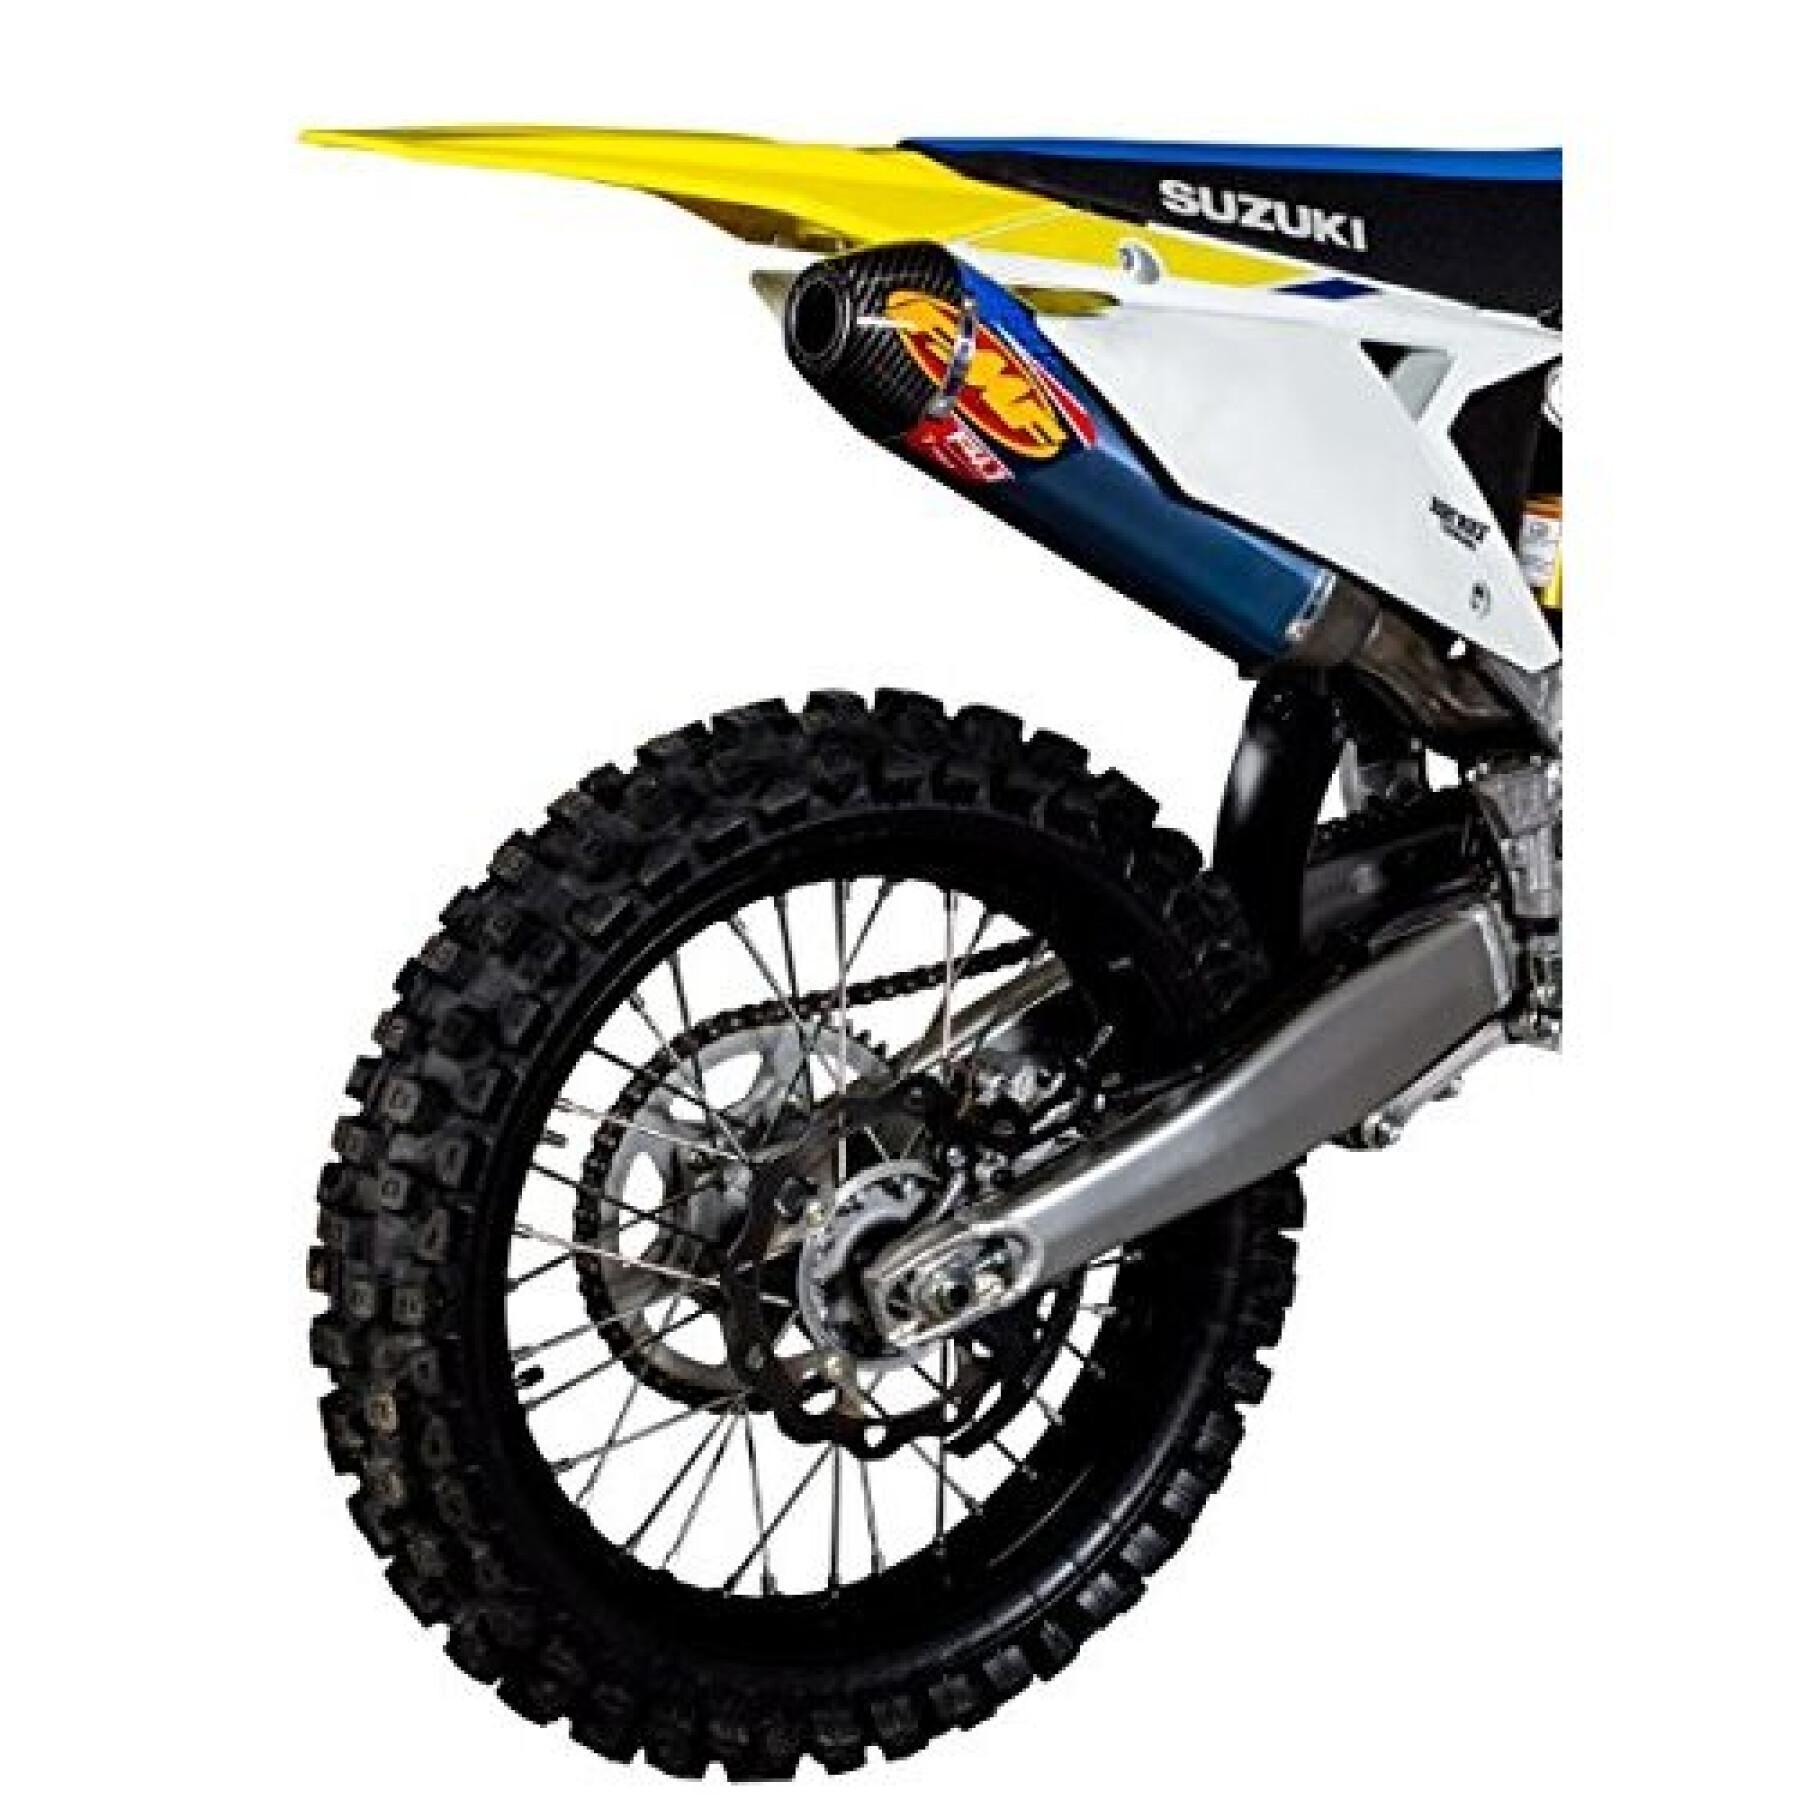 4-stroke motorcycle exhaust FMF suzuki rmz450'18-21 anodized titanium factory 4.1 rct slip-on mflr w/r.carbon